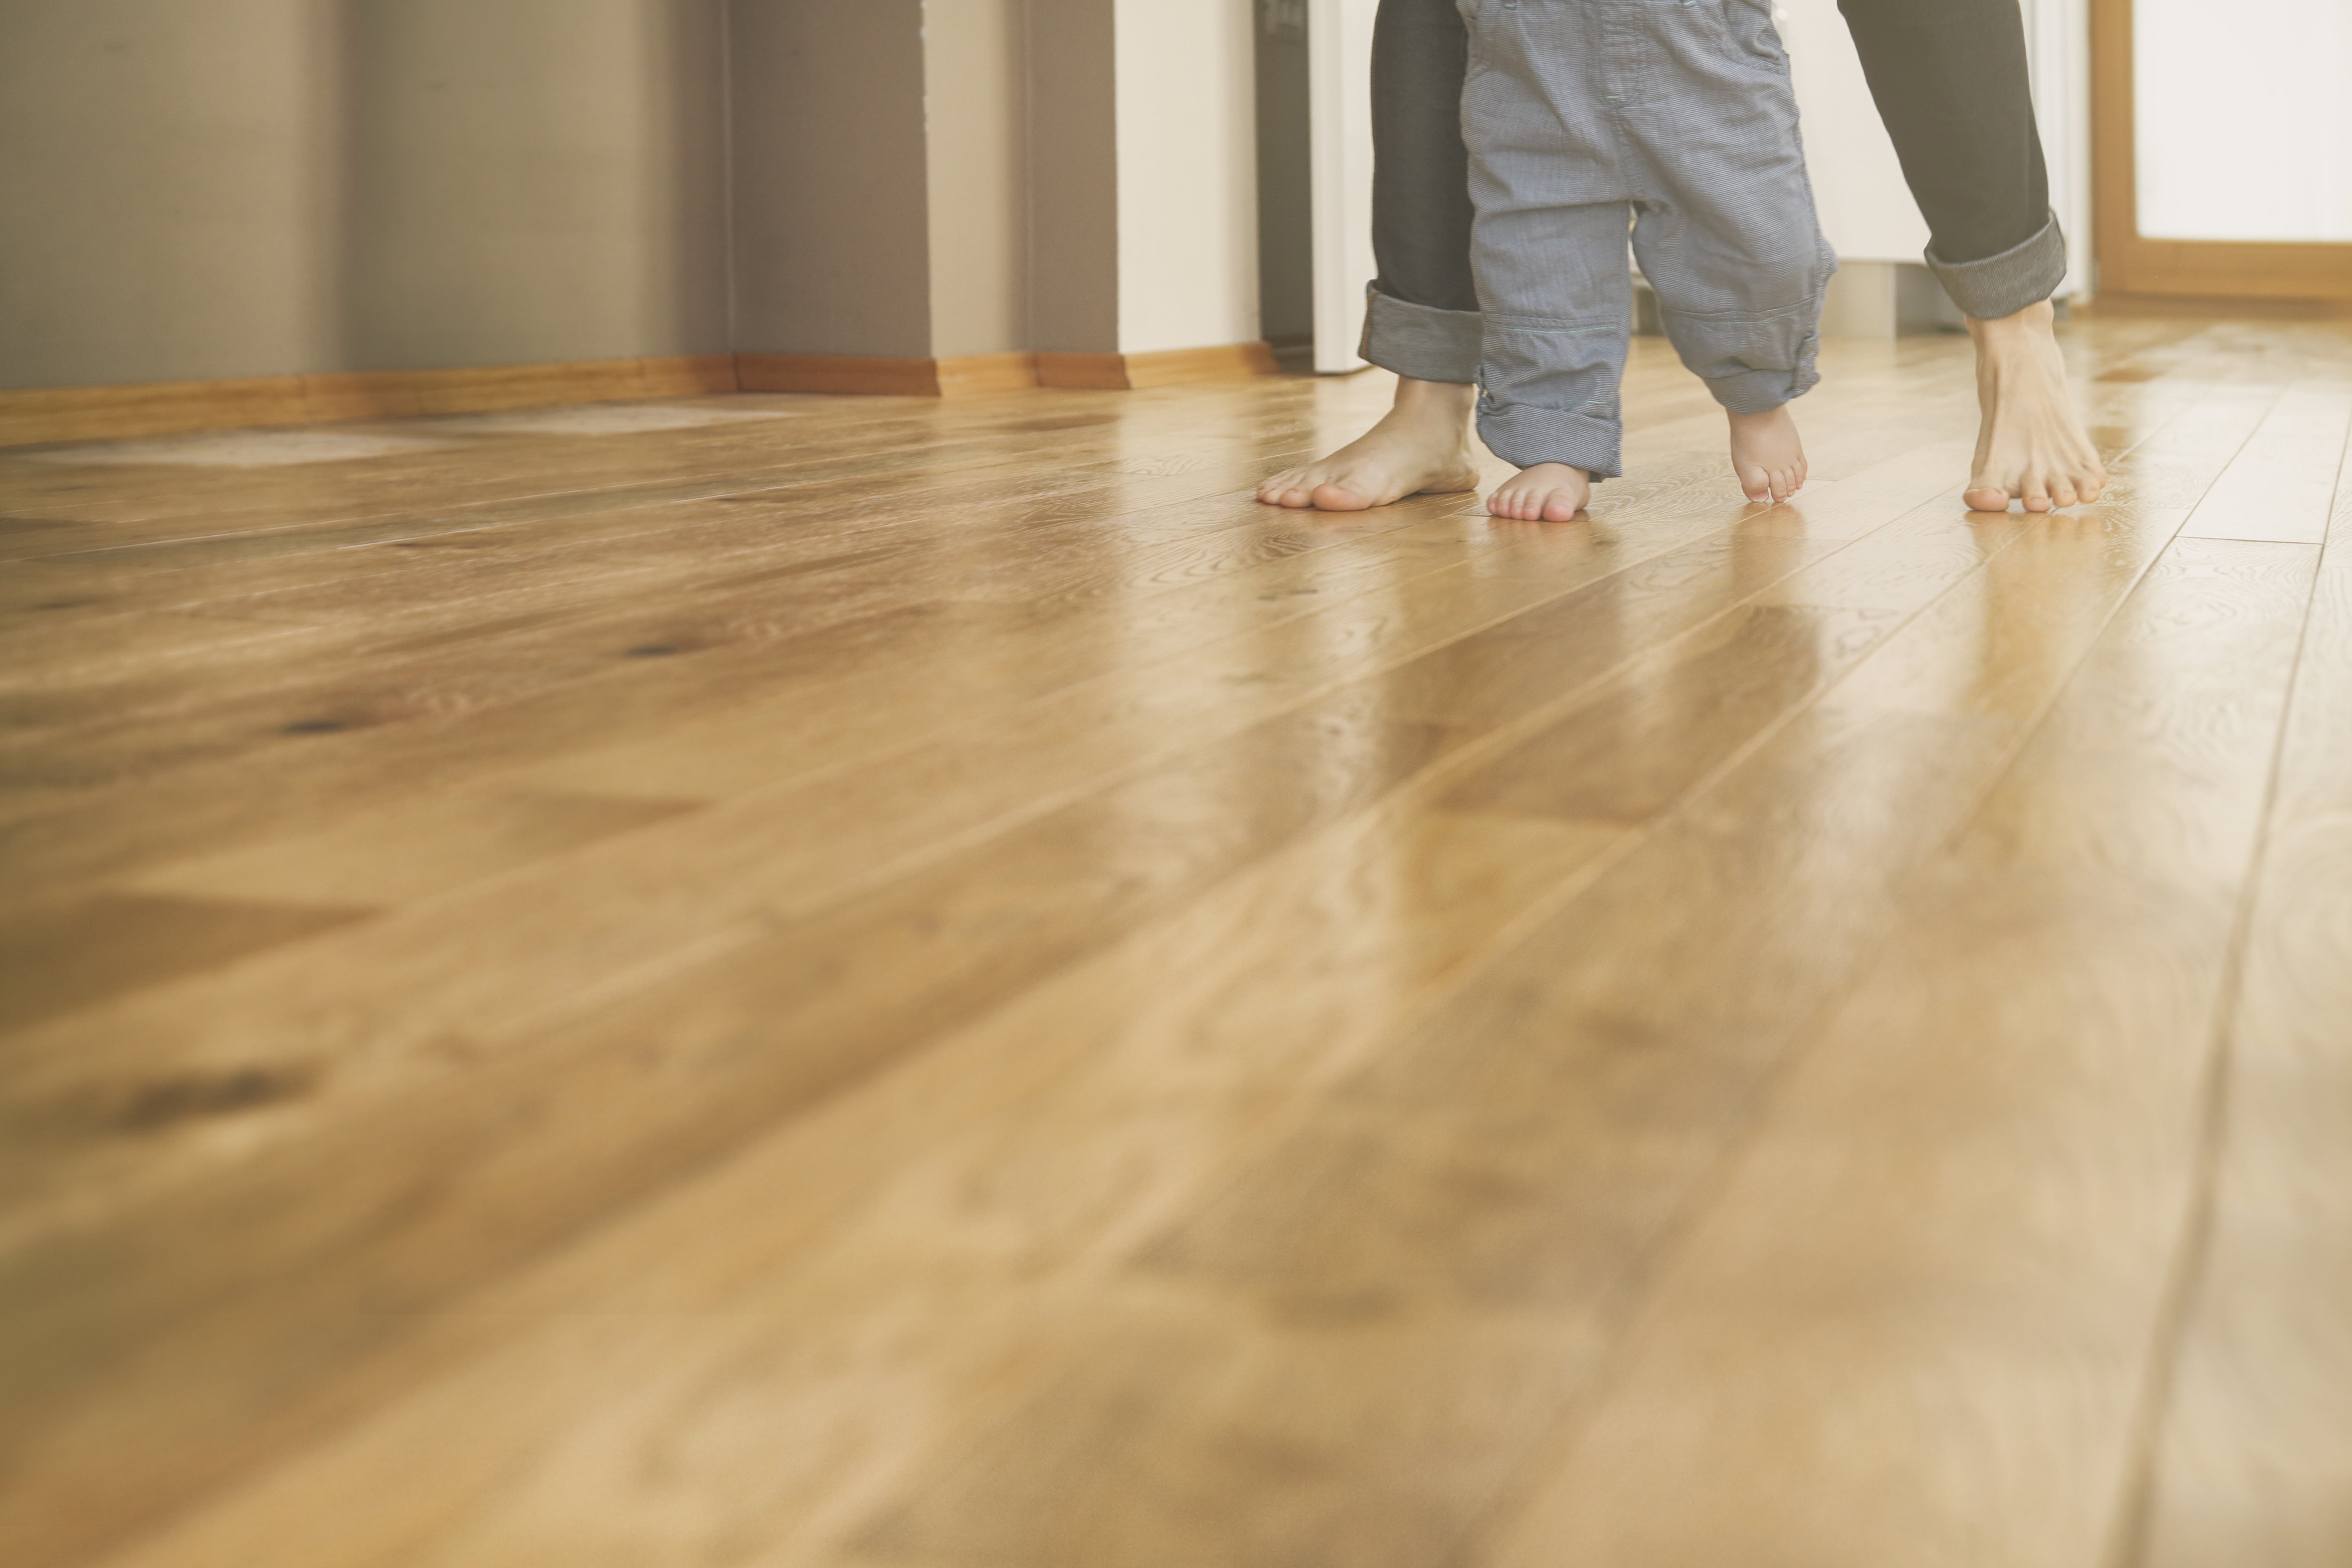 Bona Hard Surface Floor Polish Us, Is Bona Safe For Laminate Floors